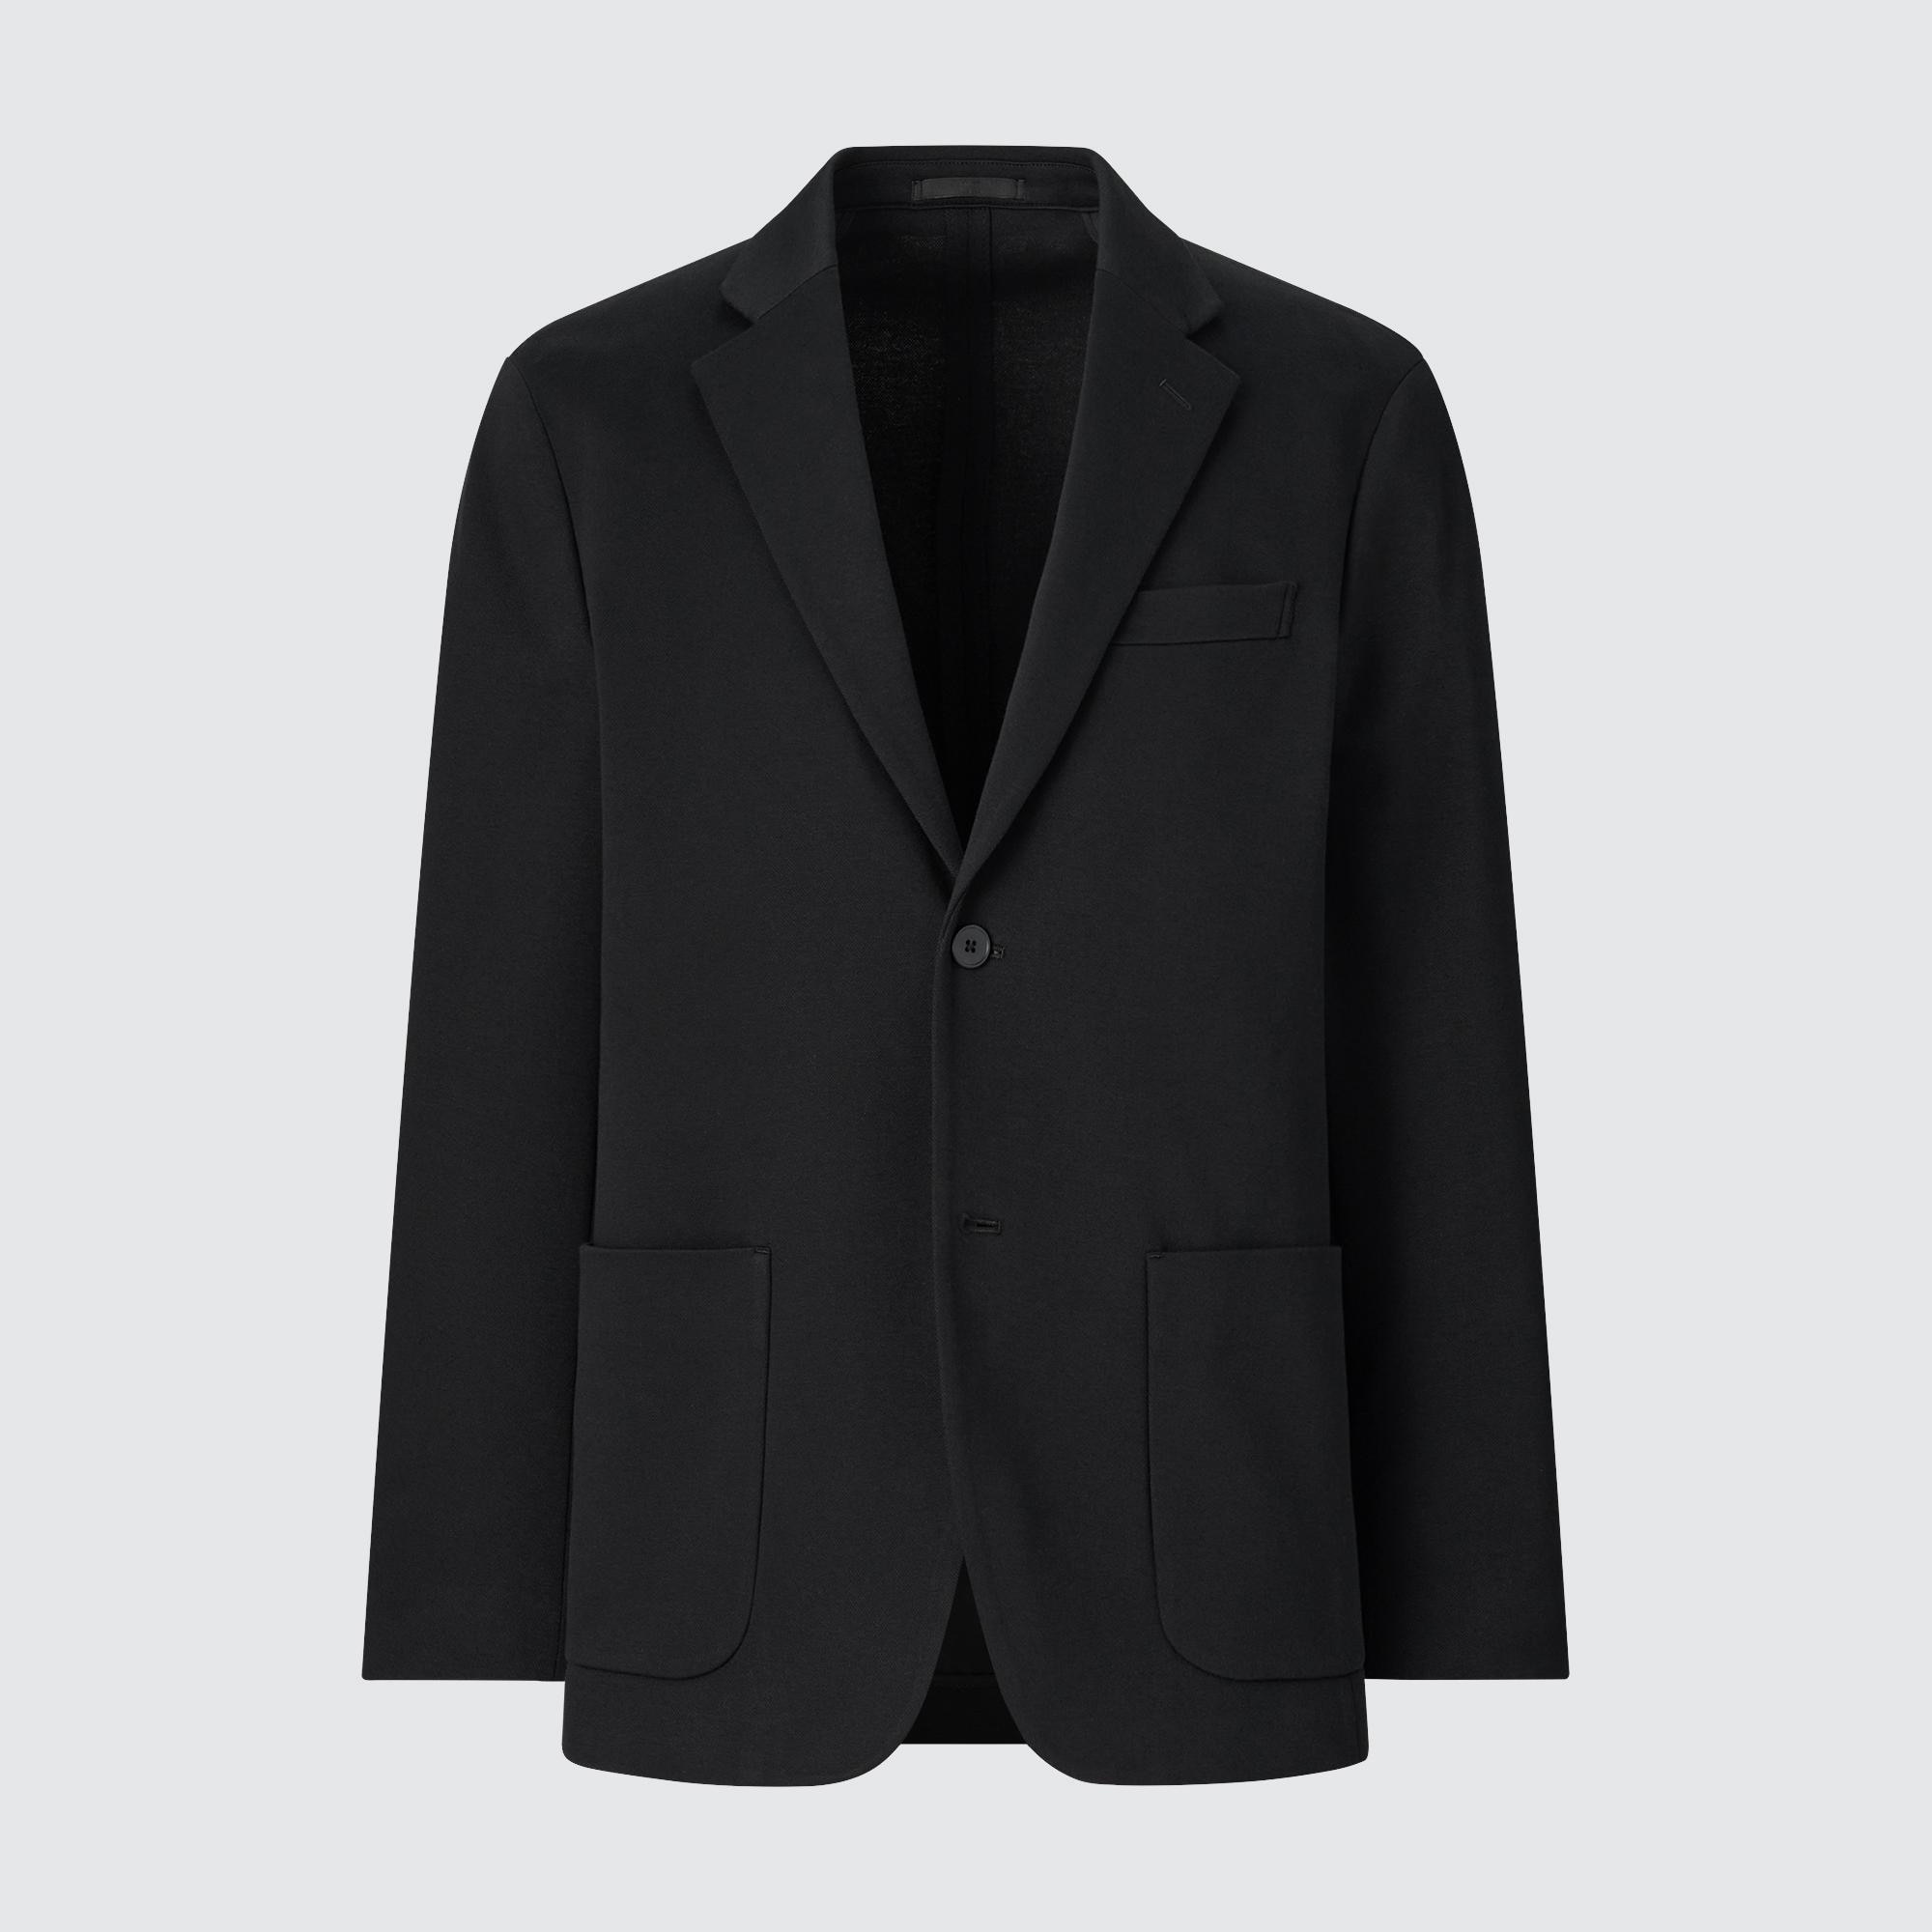 Куртка UNIQLO Comfort 2B из хлопка, черный куртка uniqlo comfort 2b на пуговицах темно серый